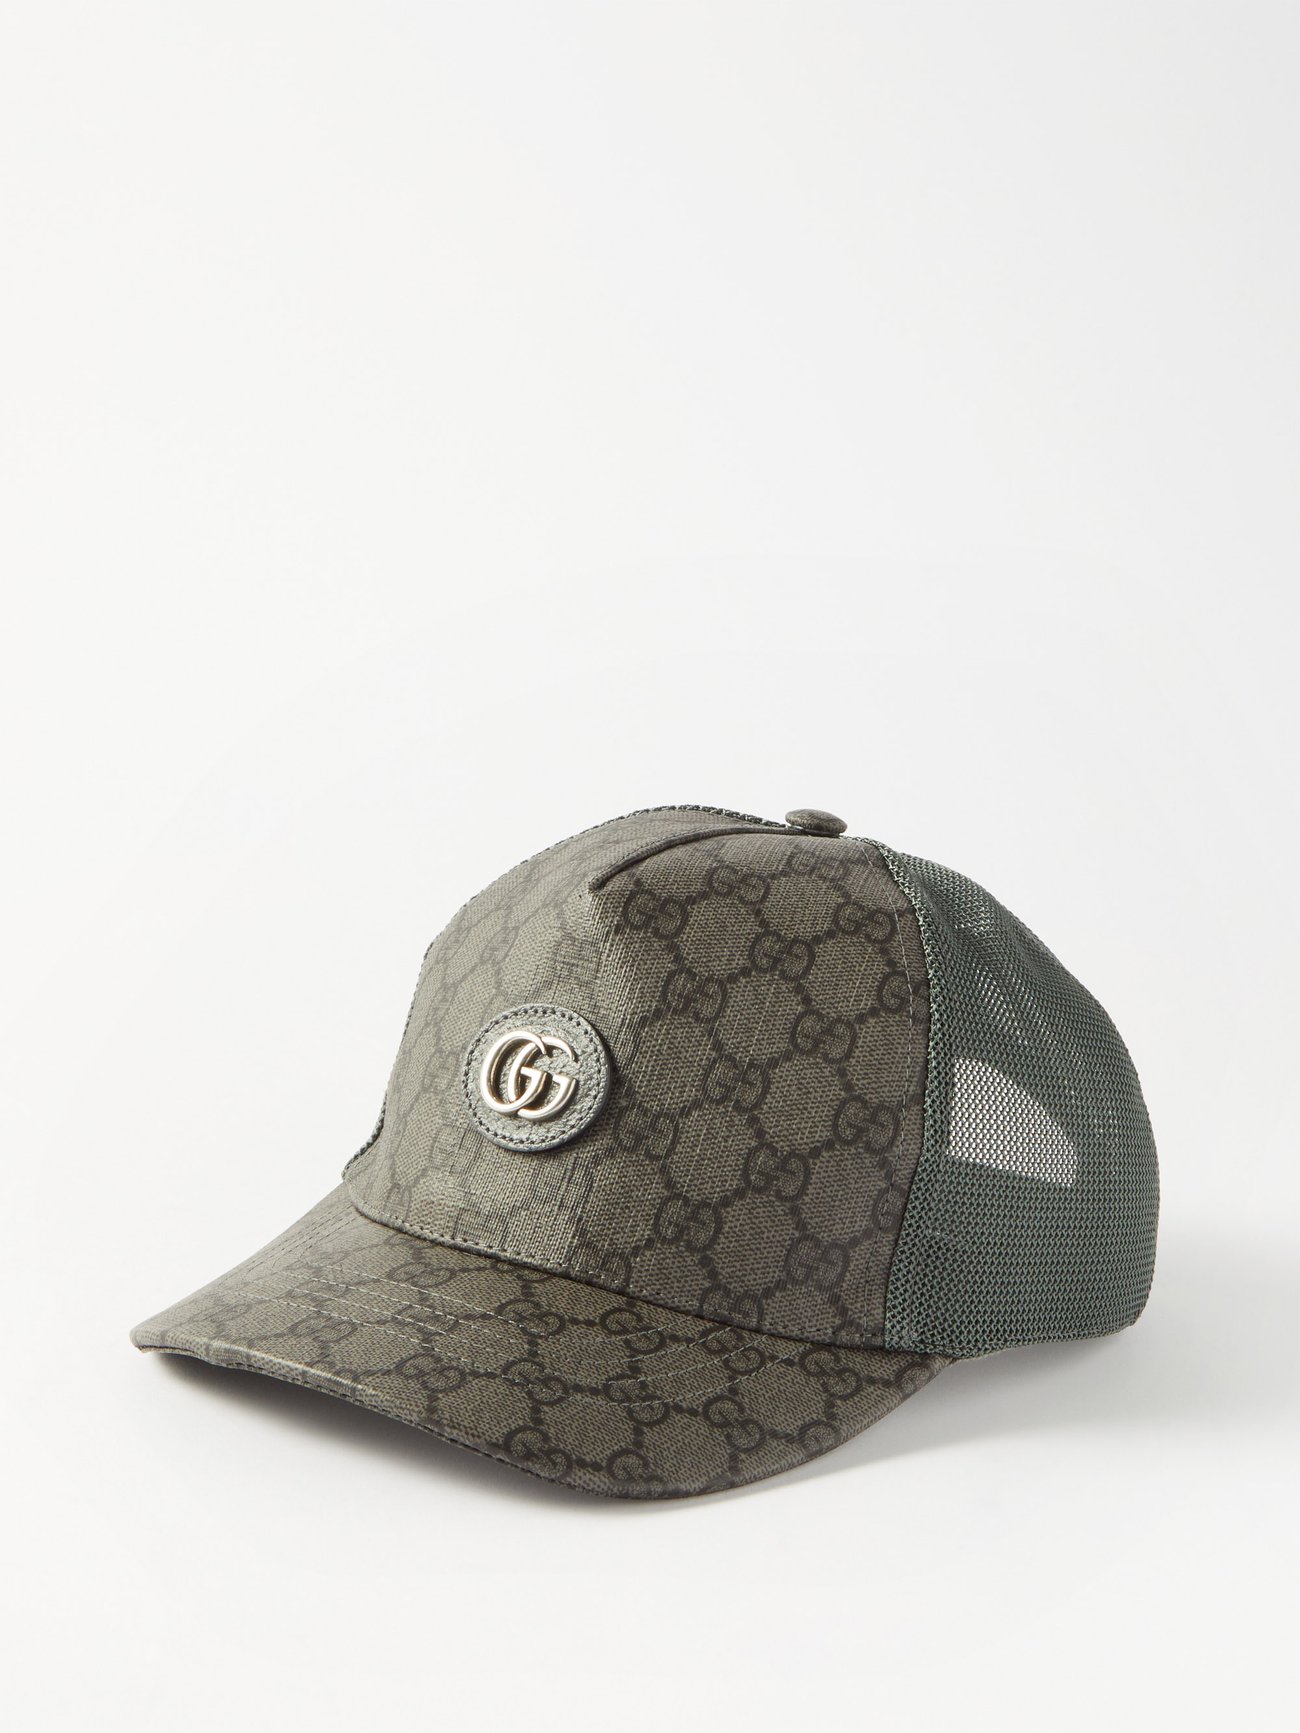 Grey GG Supreme coated-canvas baseball cap, Gucci